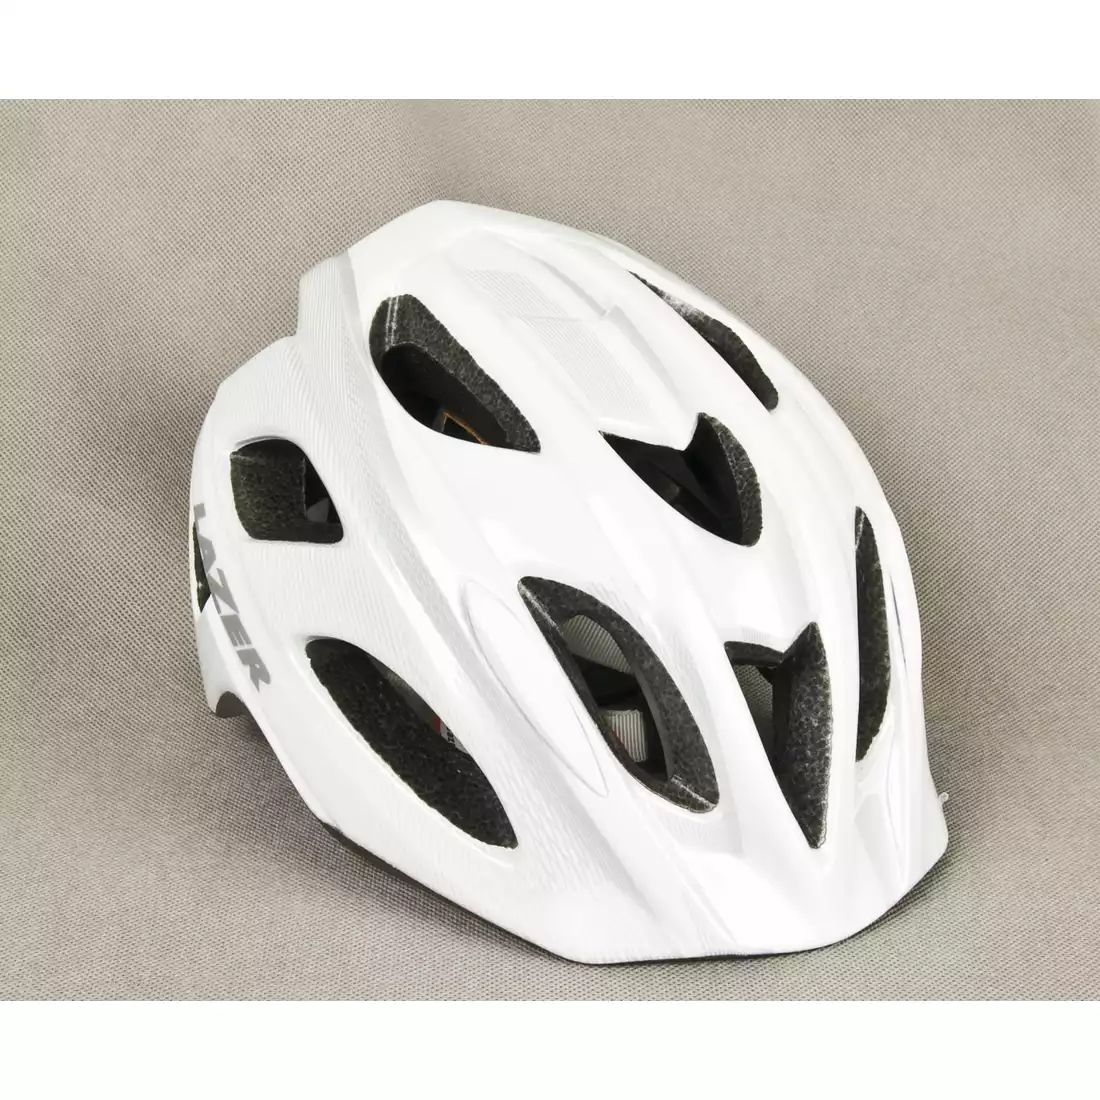 LAZER - BEAM kask rowerowy MTB, kolor: white